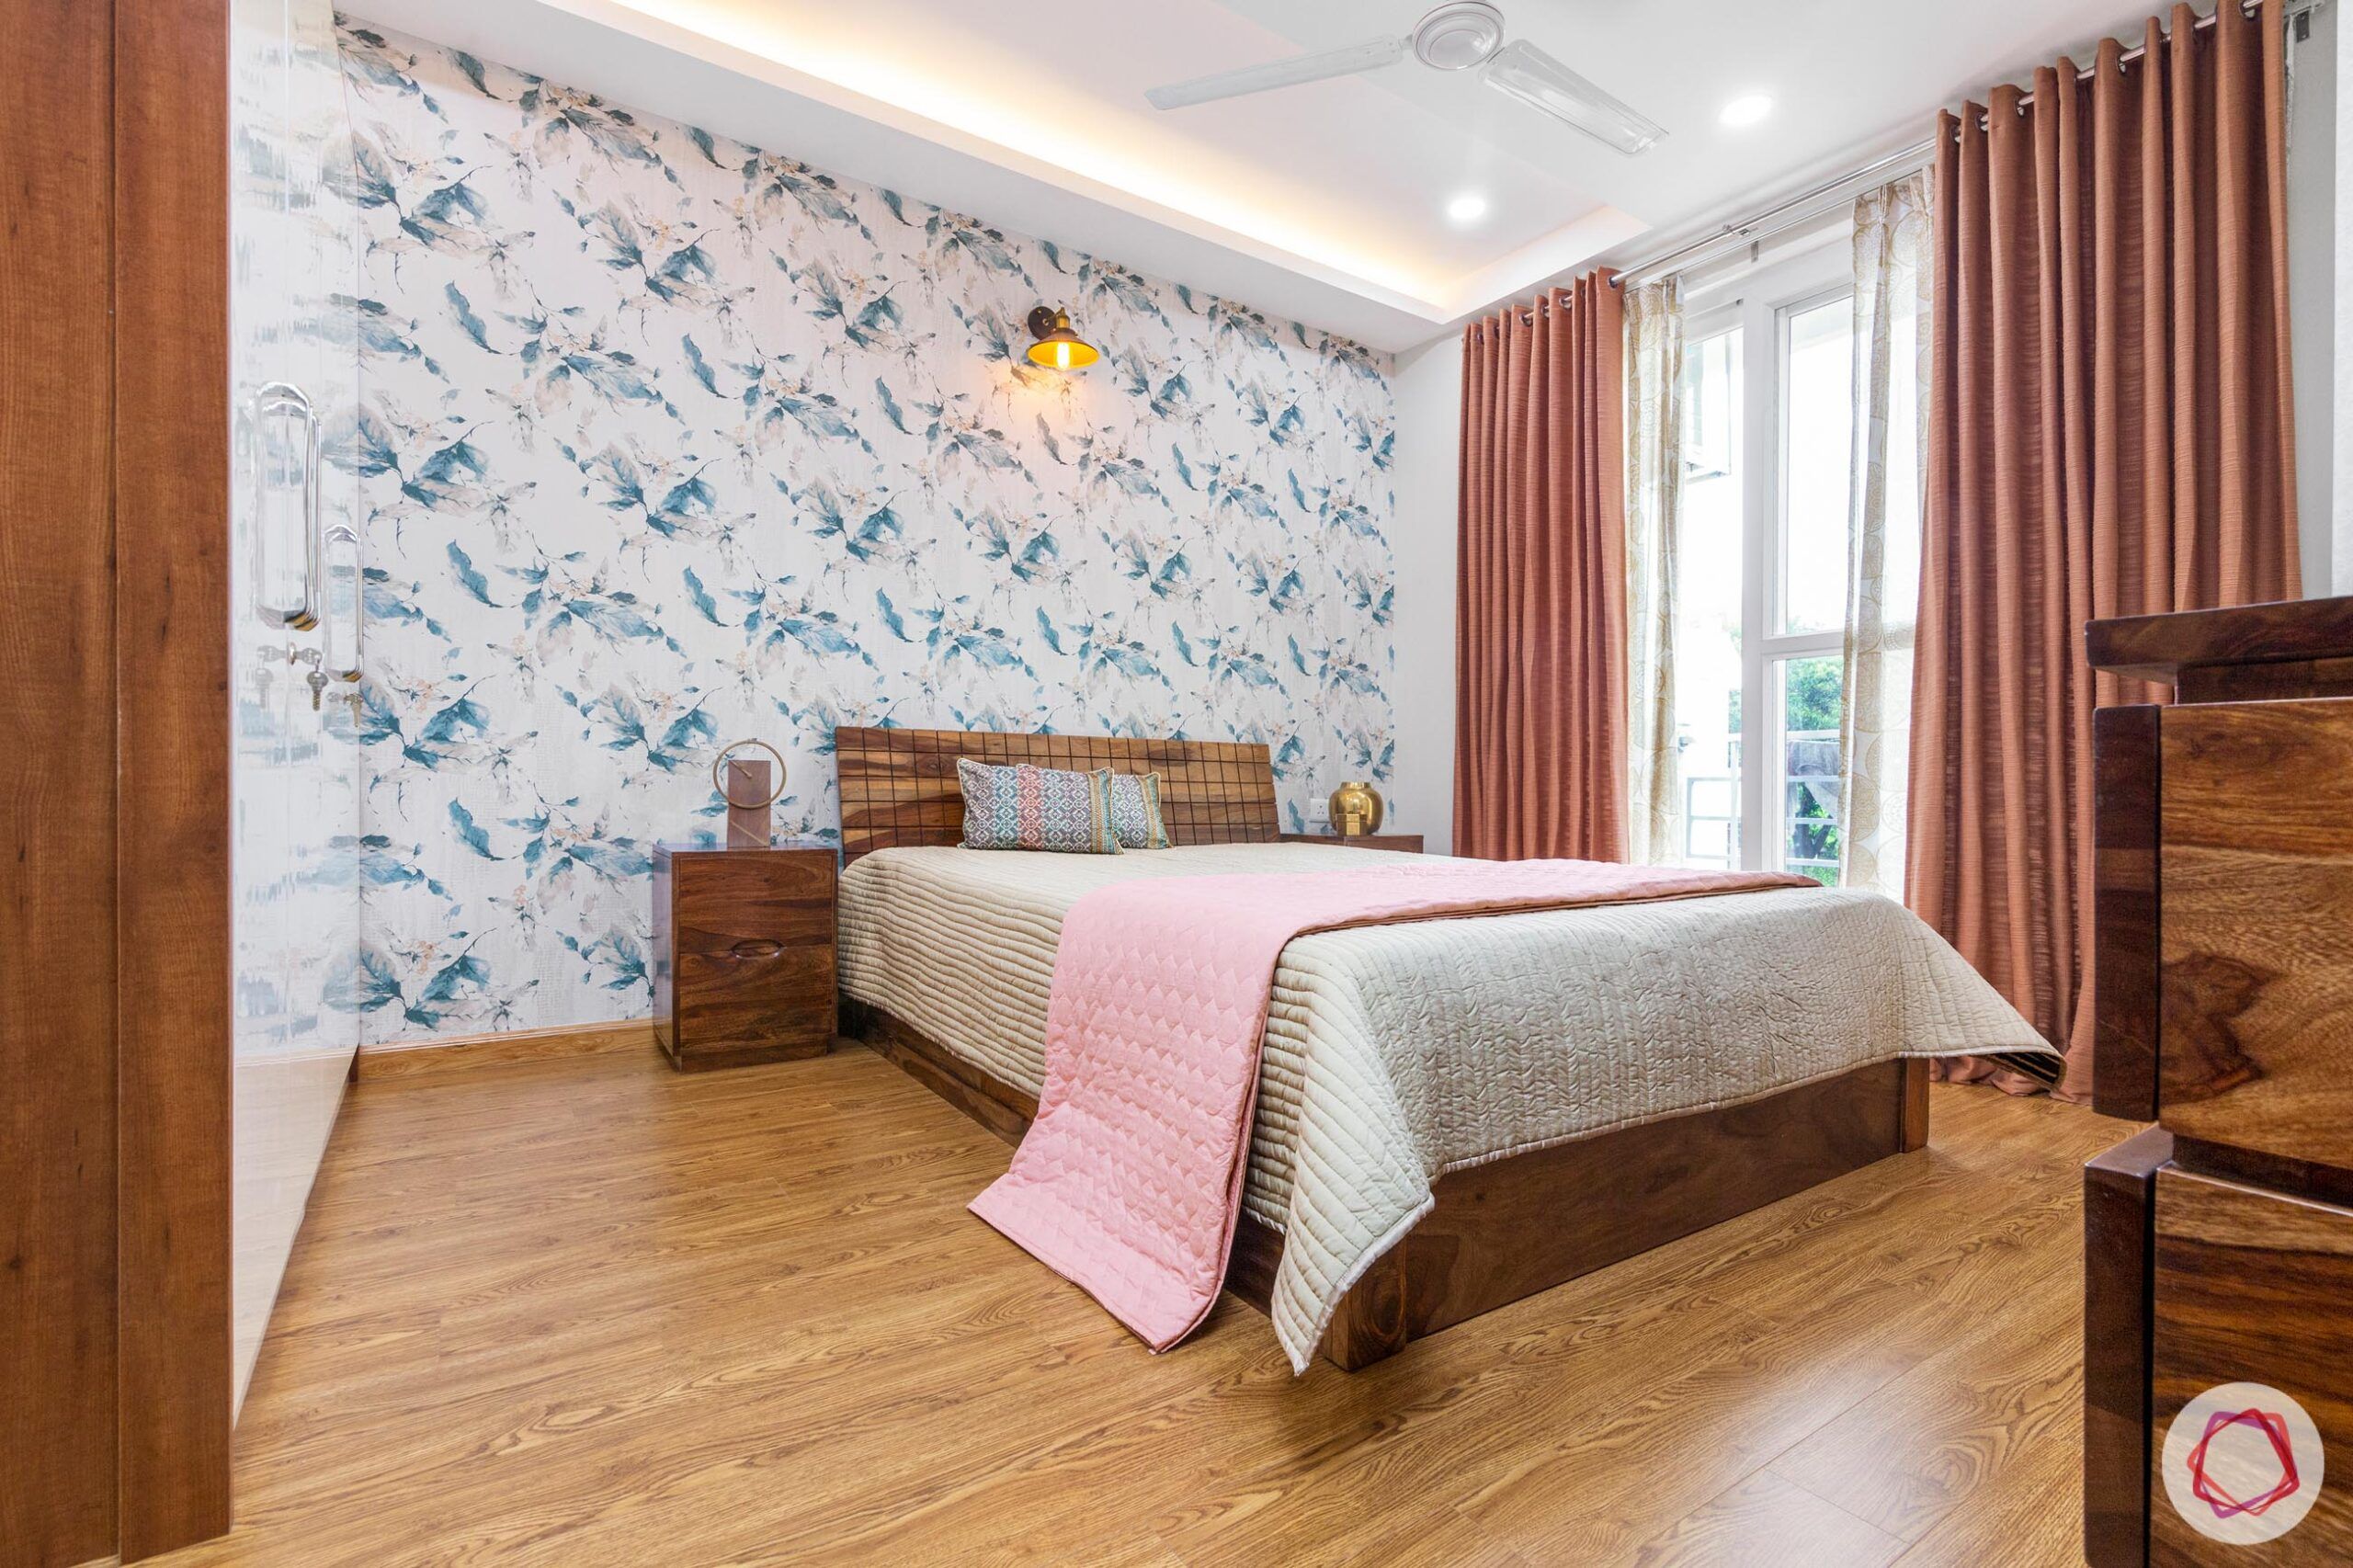 interior-in-gurgaon-master-bedroom-wooden-bed-floral-wallpaper